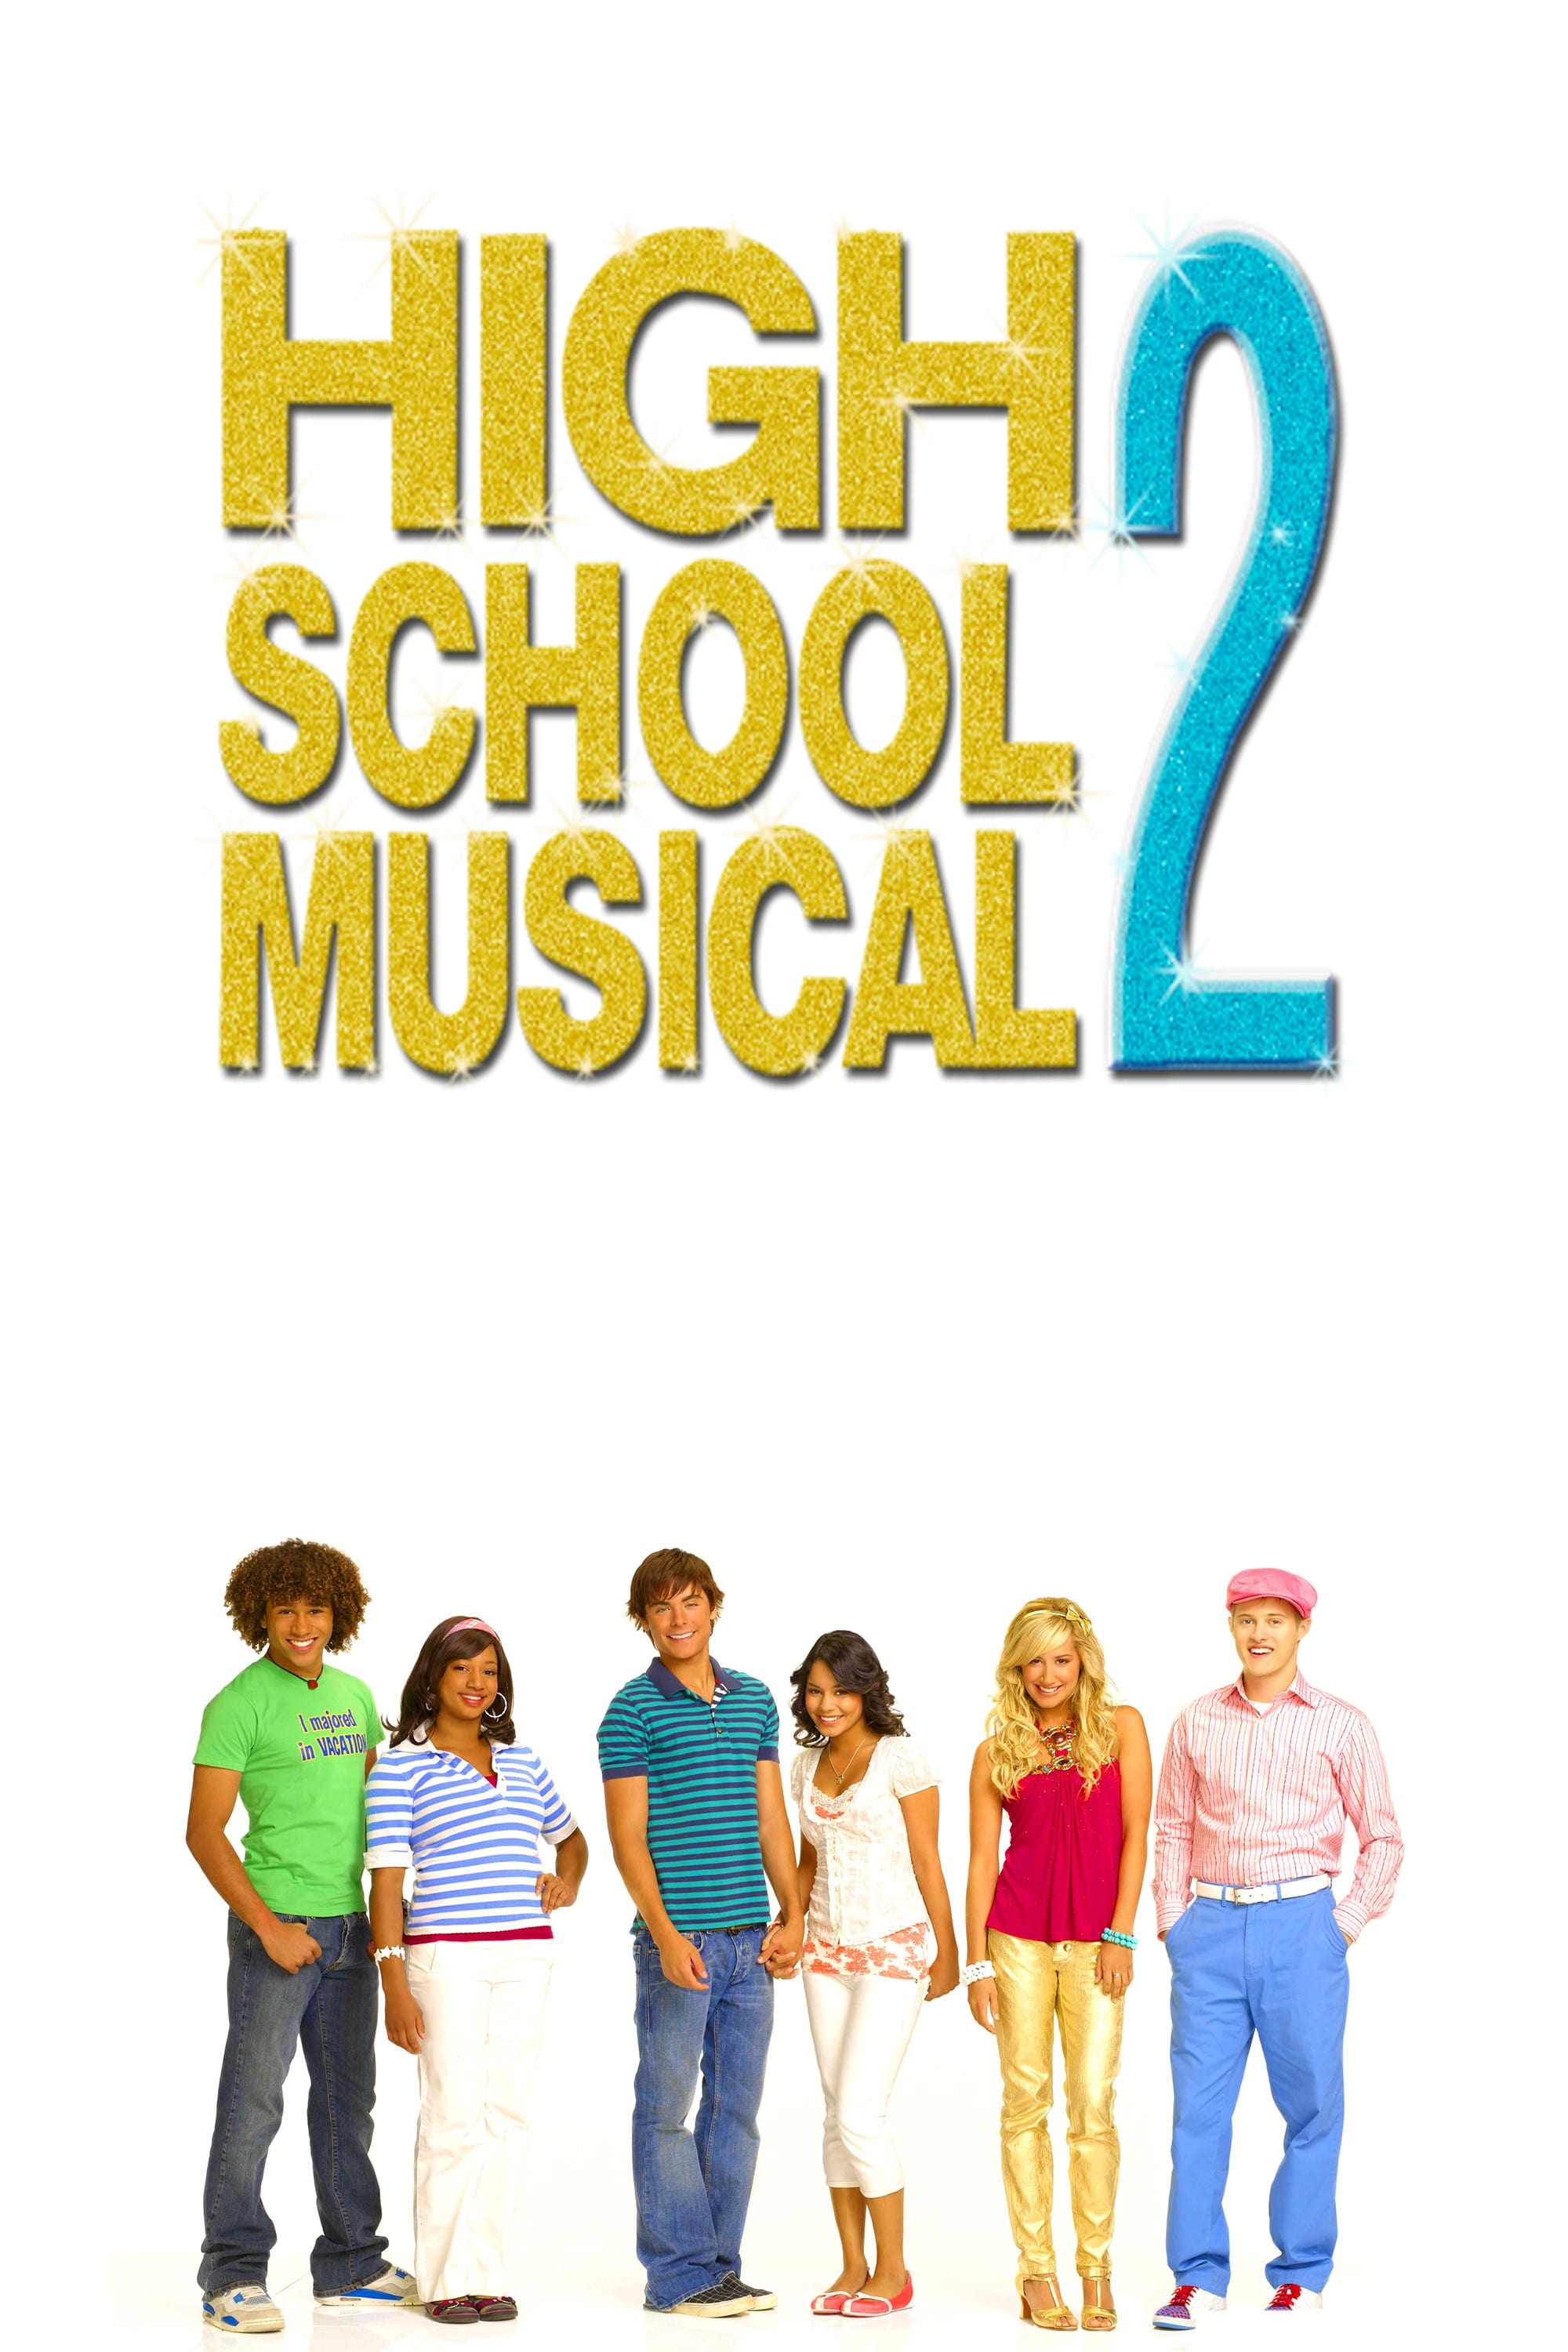 High School Musical 2 Streaming